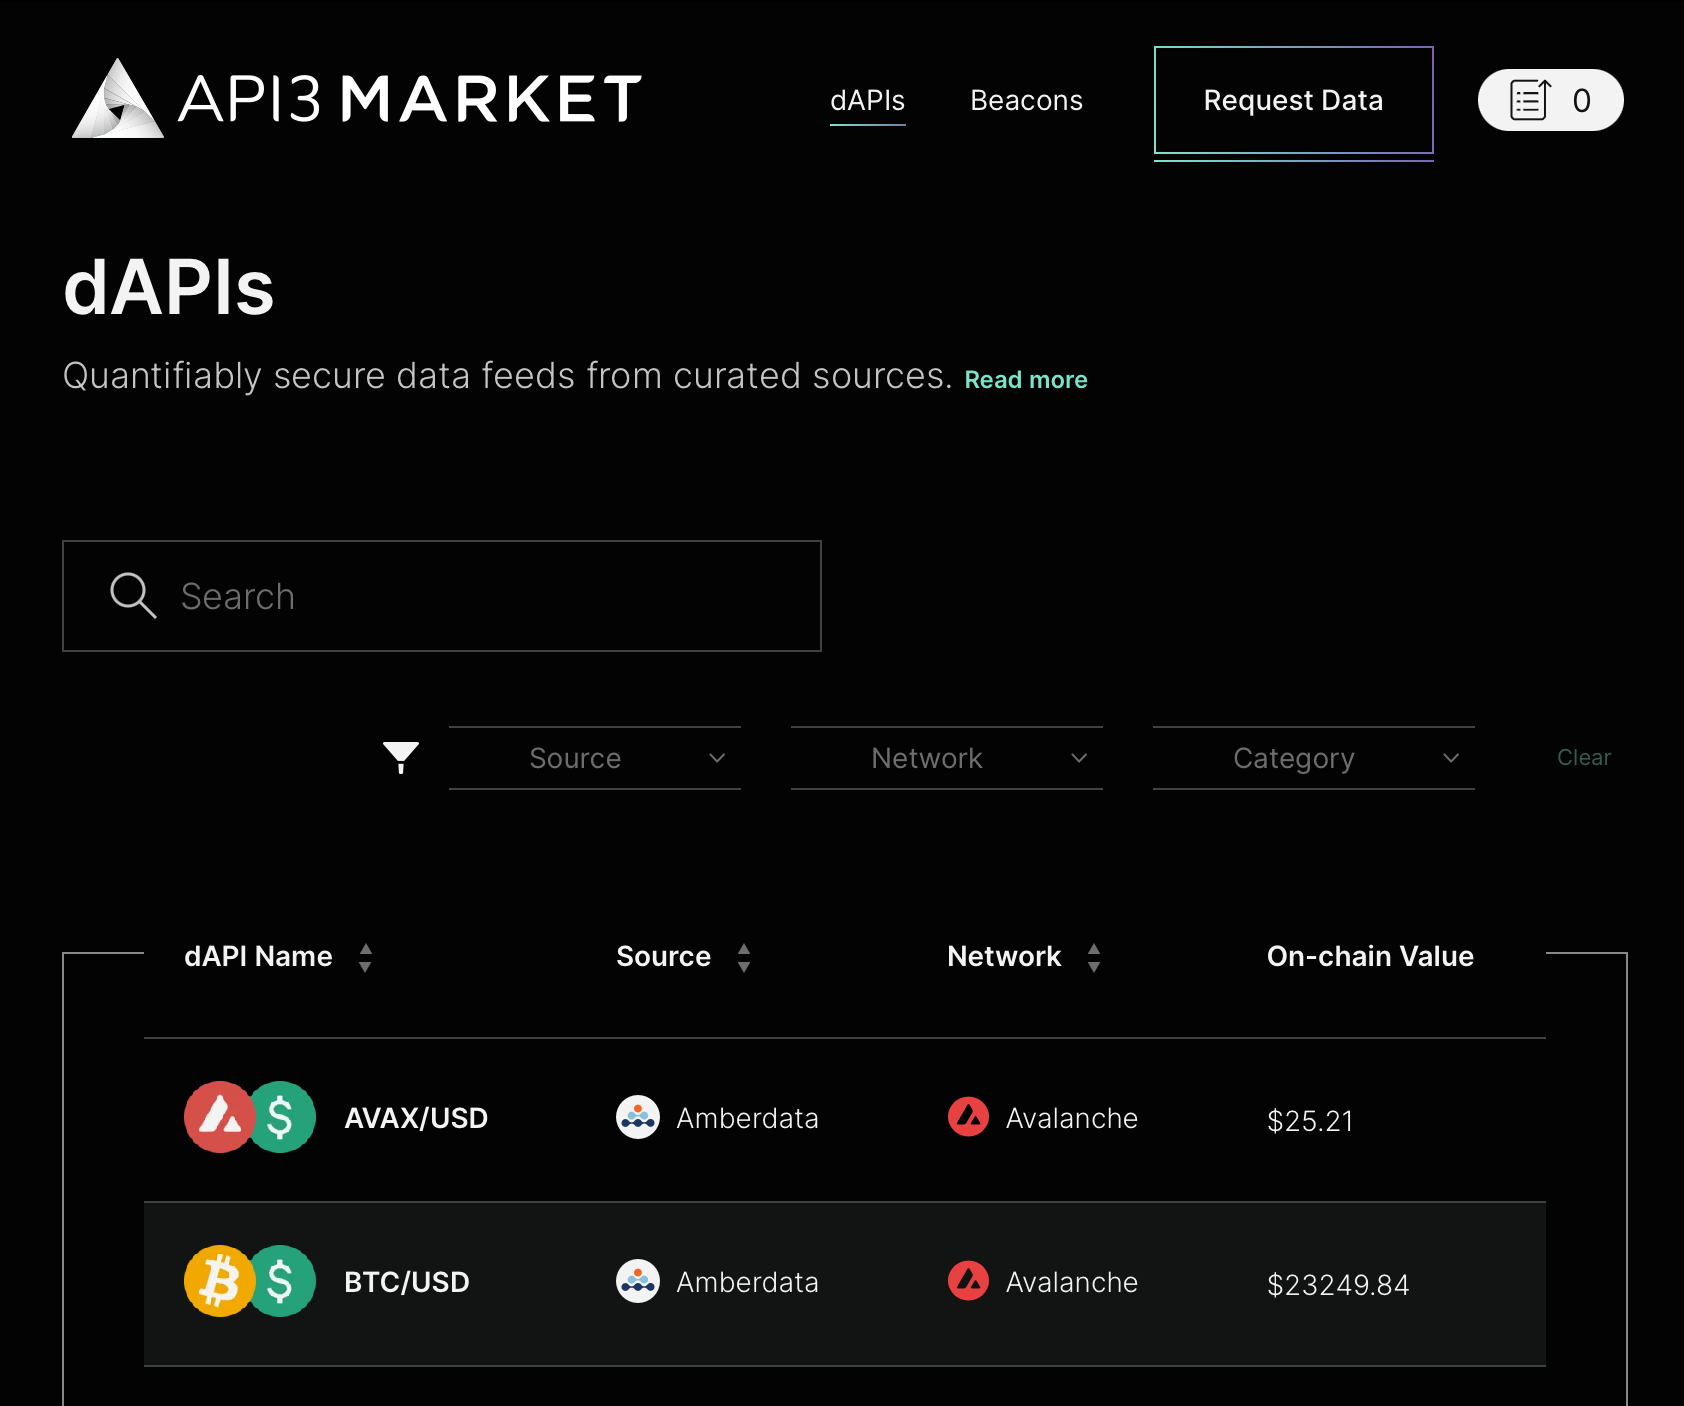 API3 Market